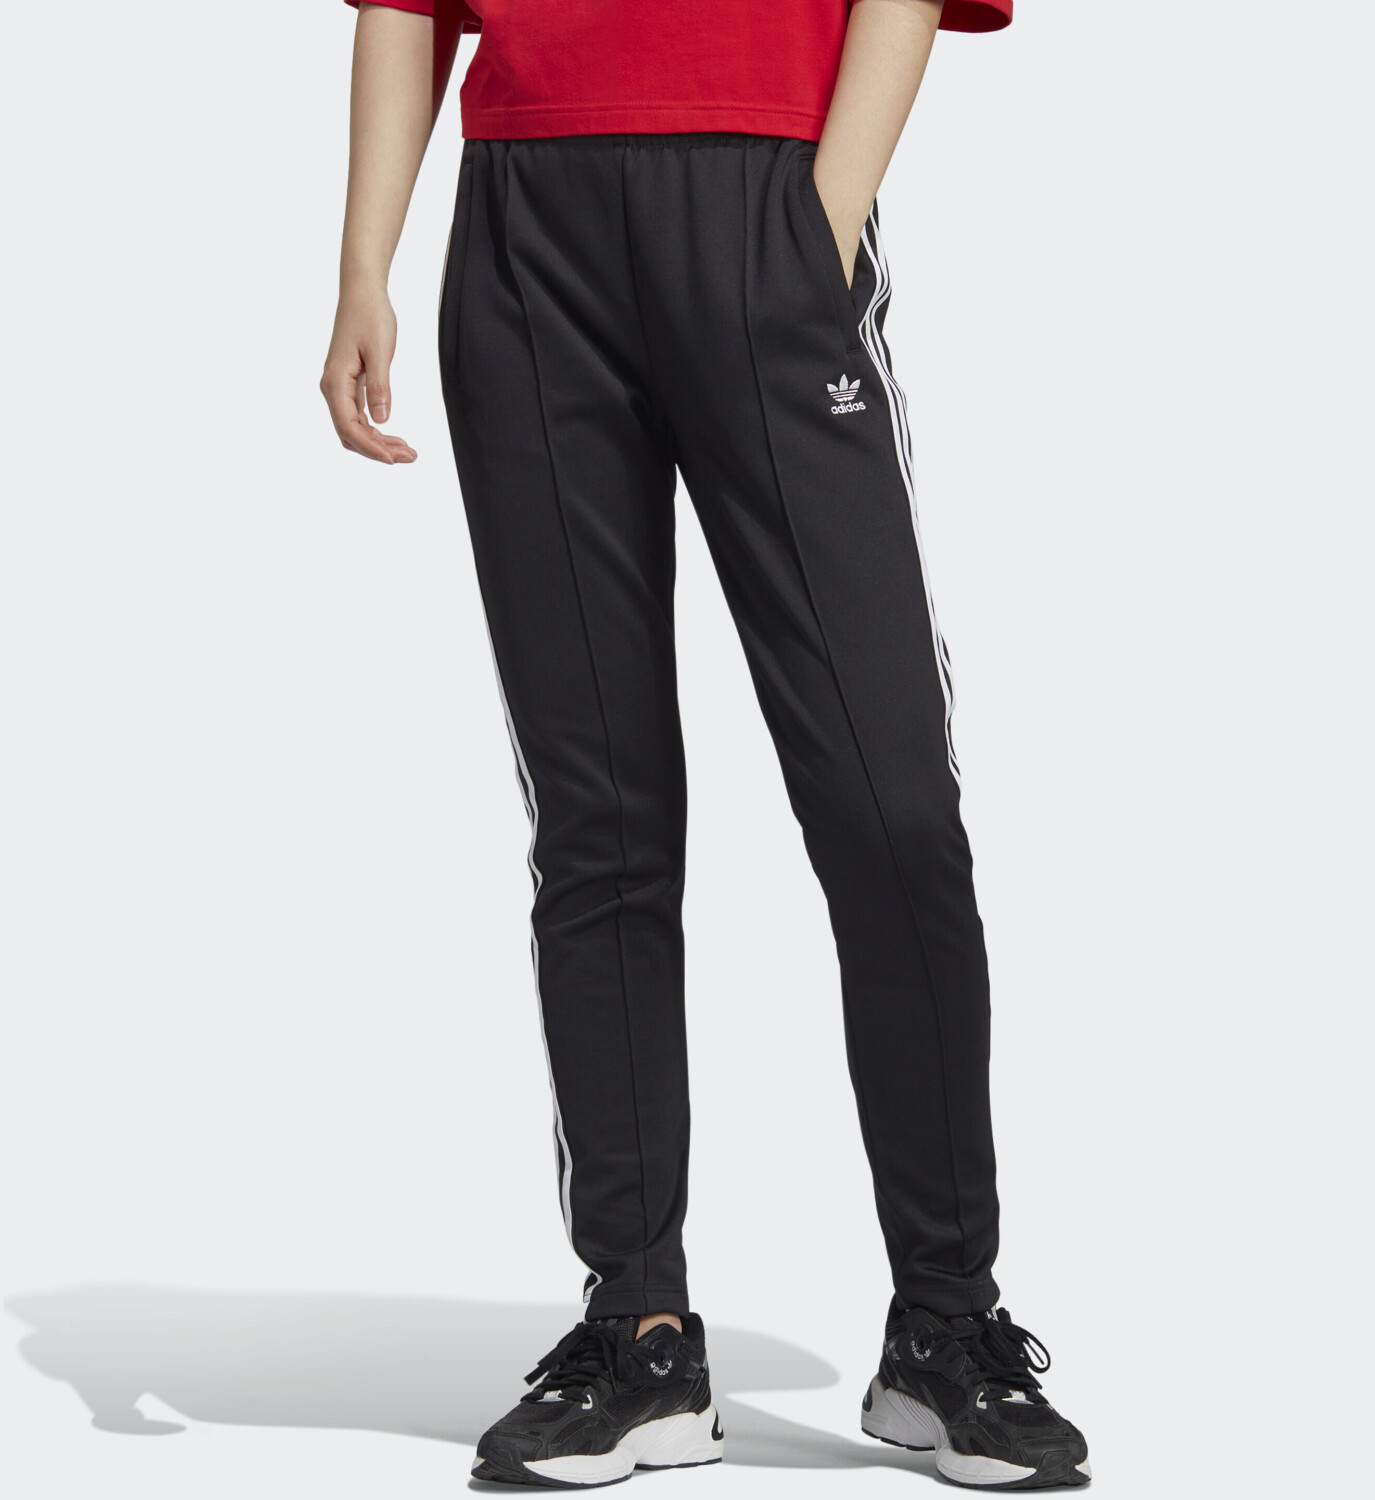 Adidas adicolor SST Trainingshose black/white ab 36,00 € | Preisvergleich  bei